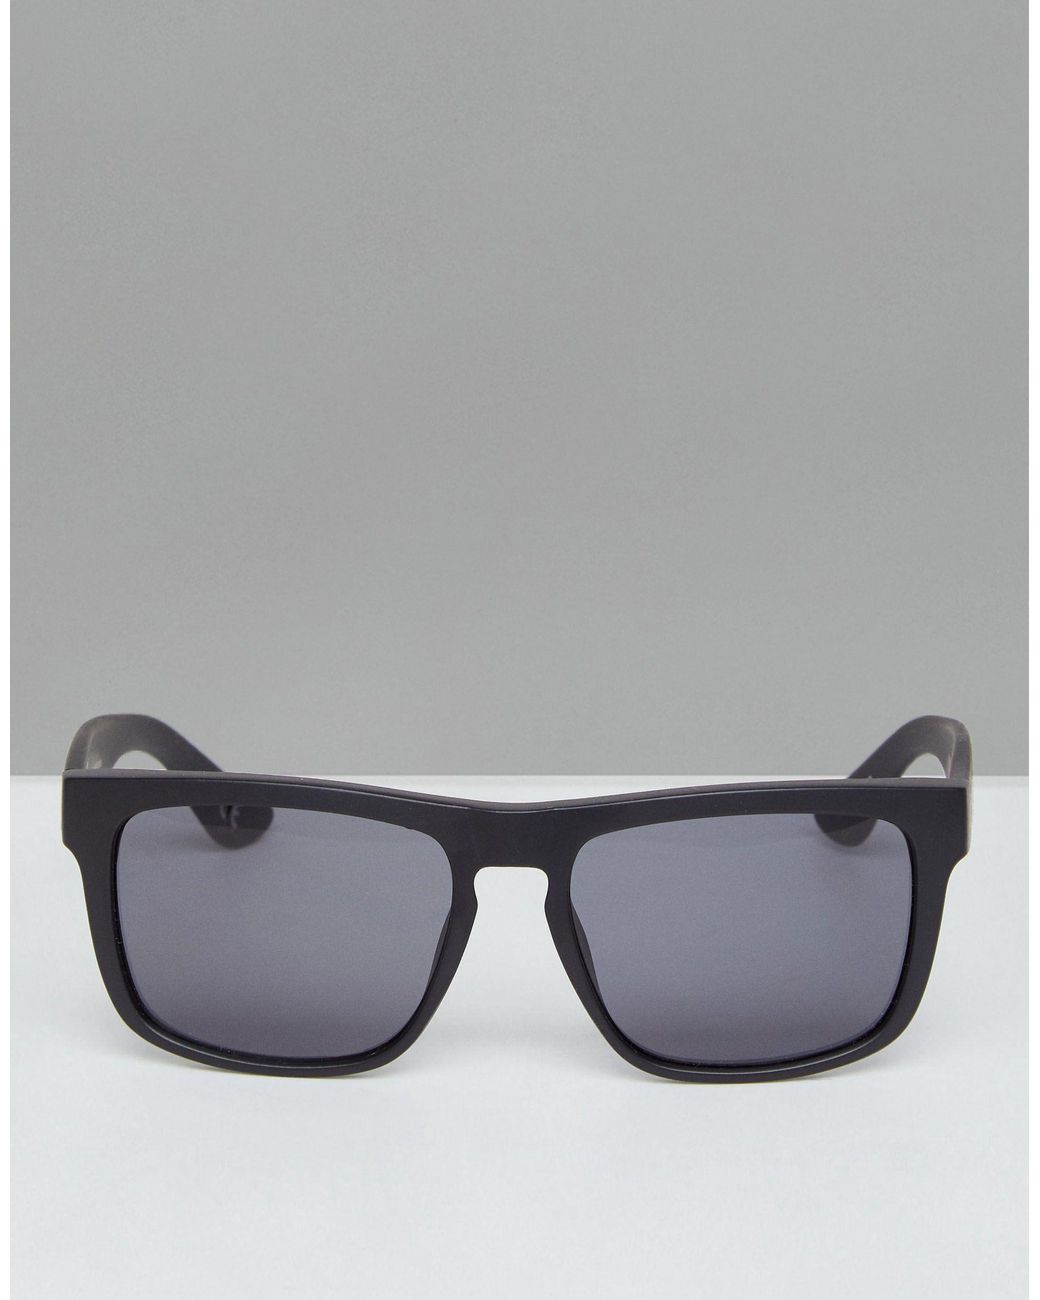 Vans Men's Black Squared Off Sunglasses